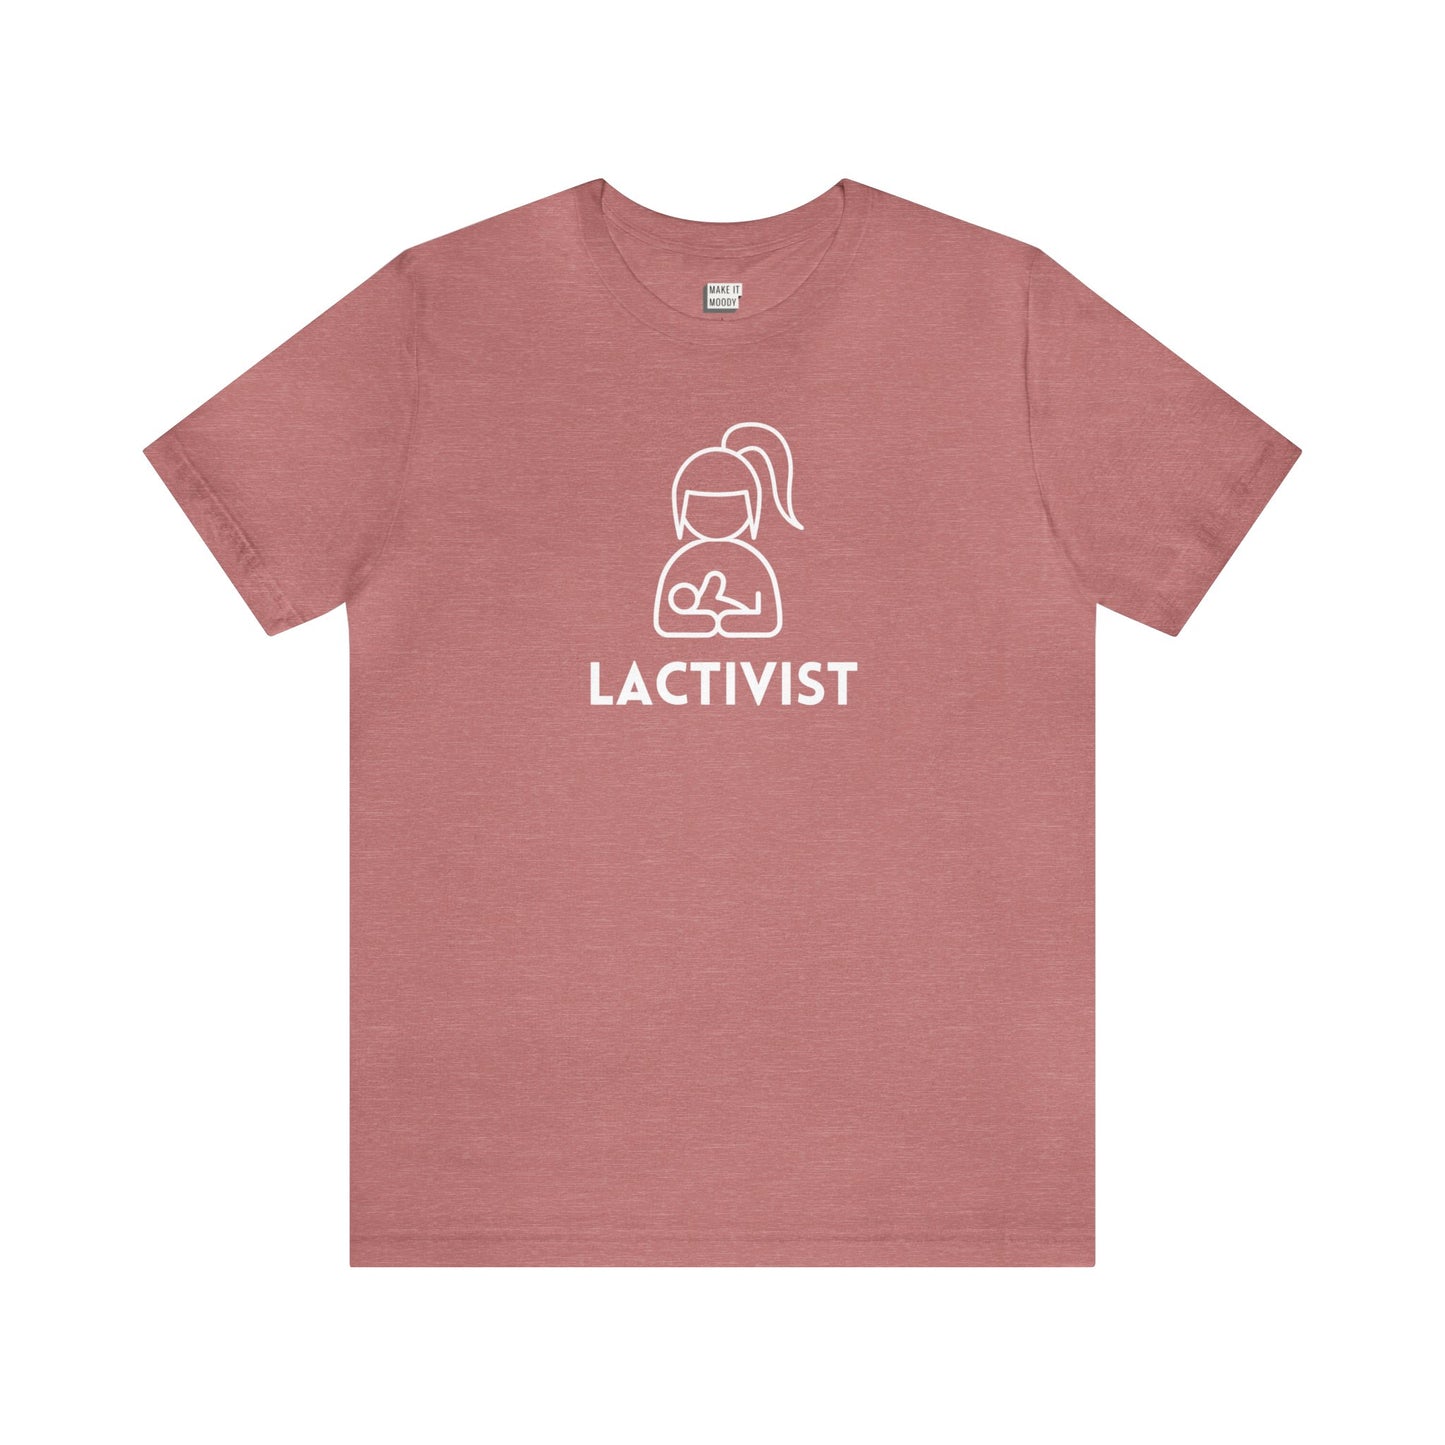 "Lactivist" Breastfeeding Tee